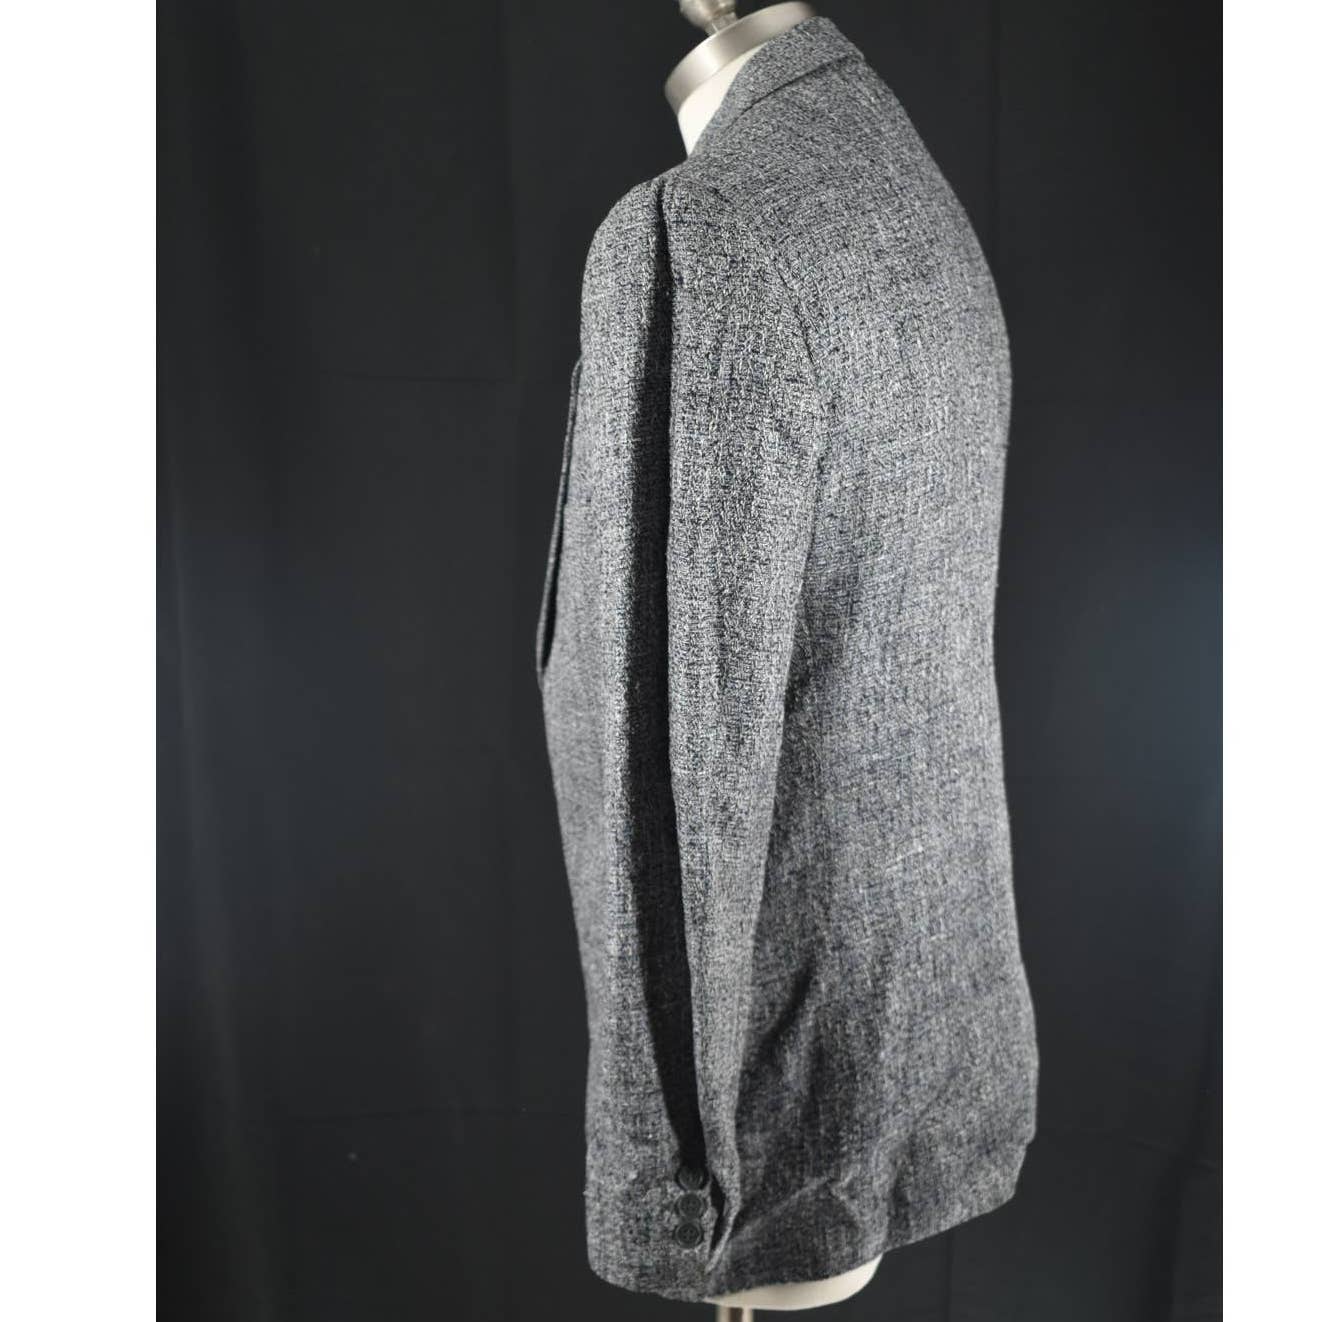 Vintage Giorgio Armani Mani Black White Tweed Sport Coat Blazer - 38R